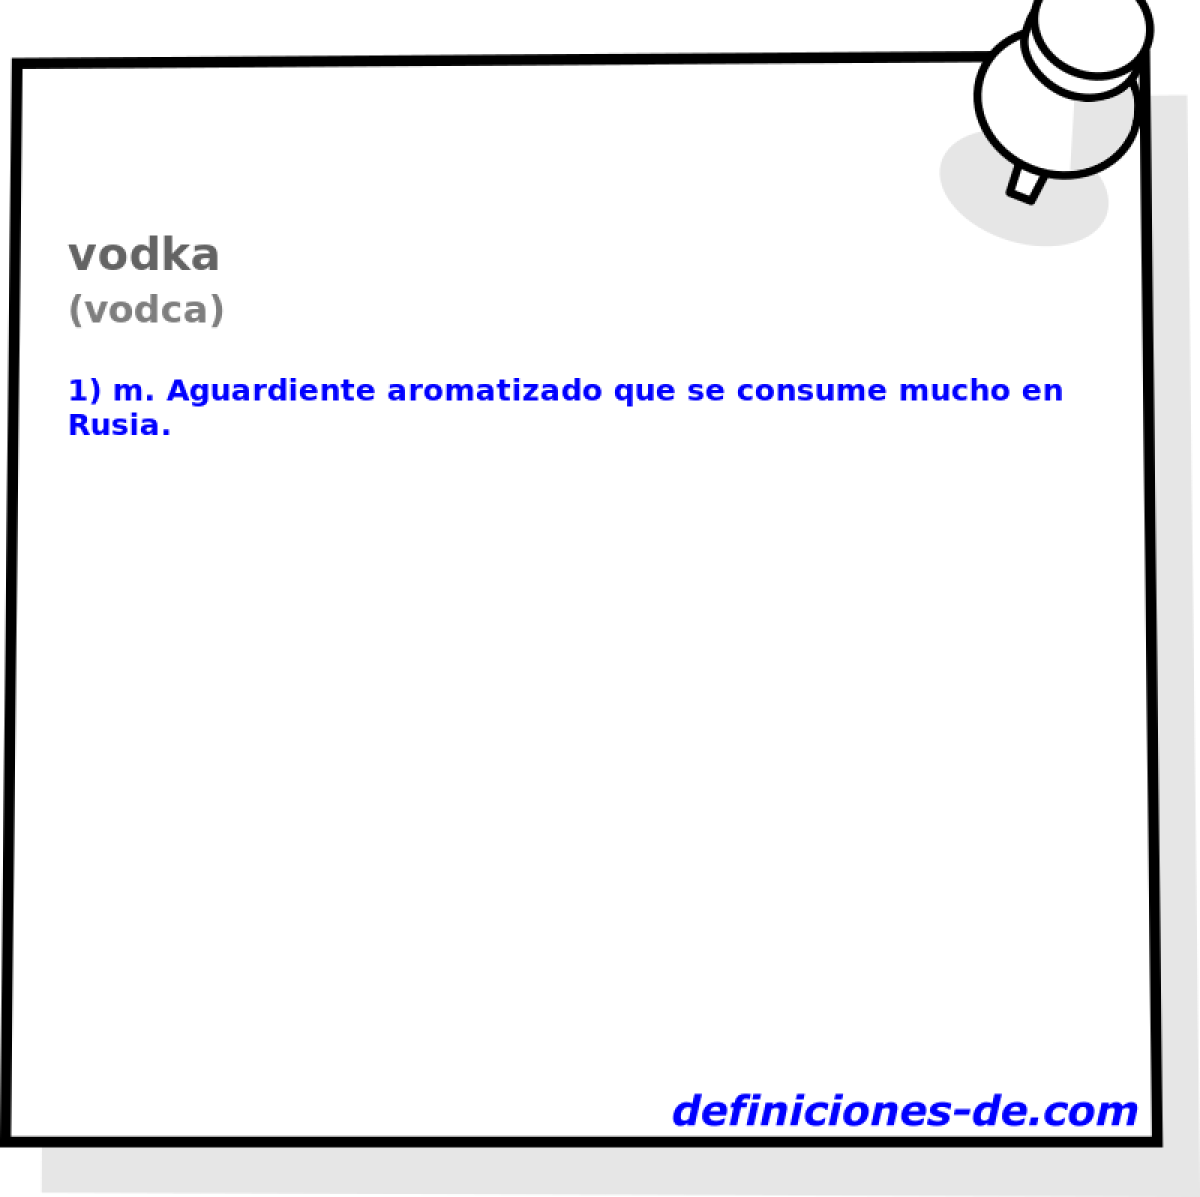 vodka (vodca)